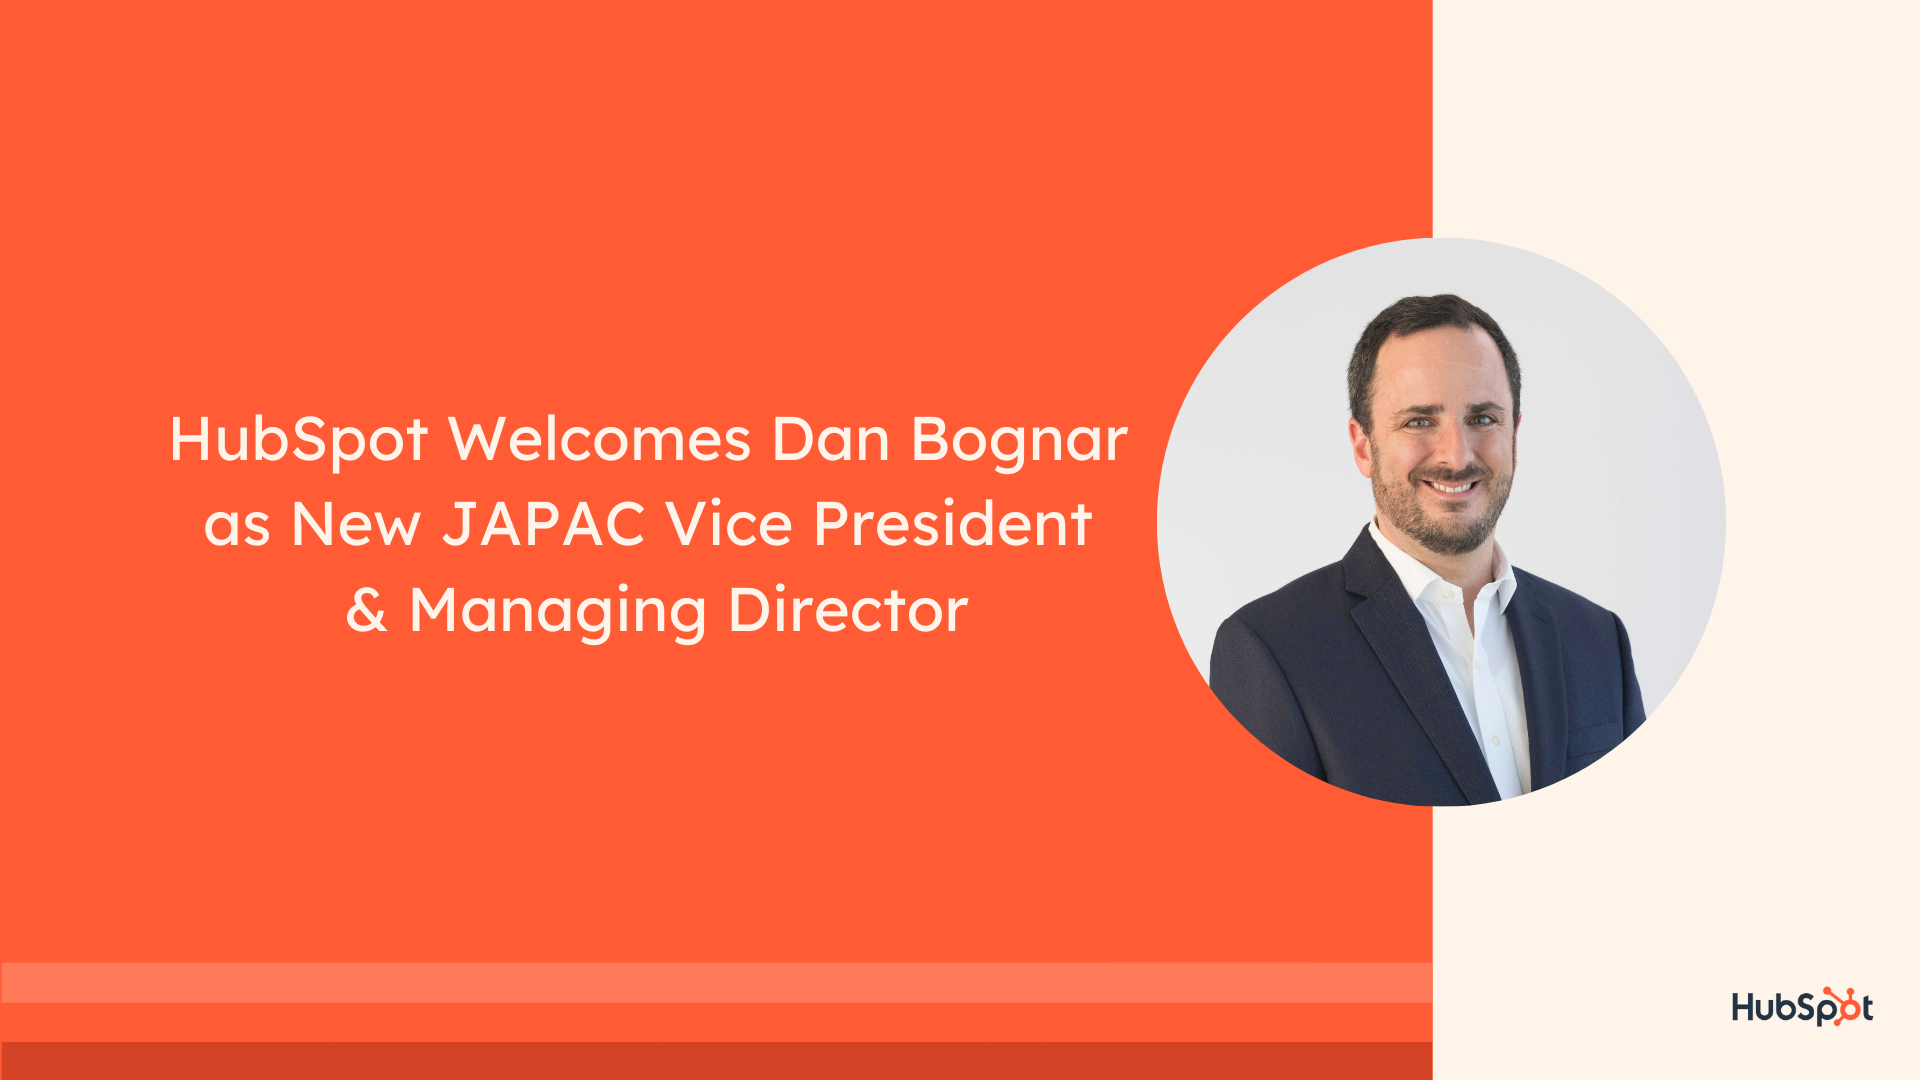 HubSpot Announces New JAPAC Vice President & Managing Director, Dan Bognar